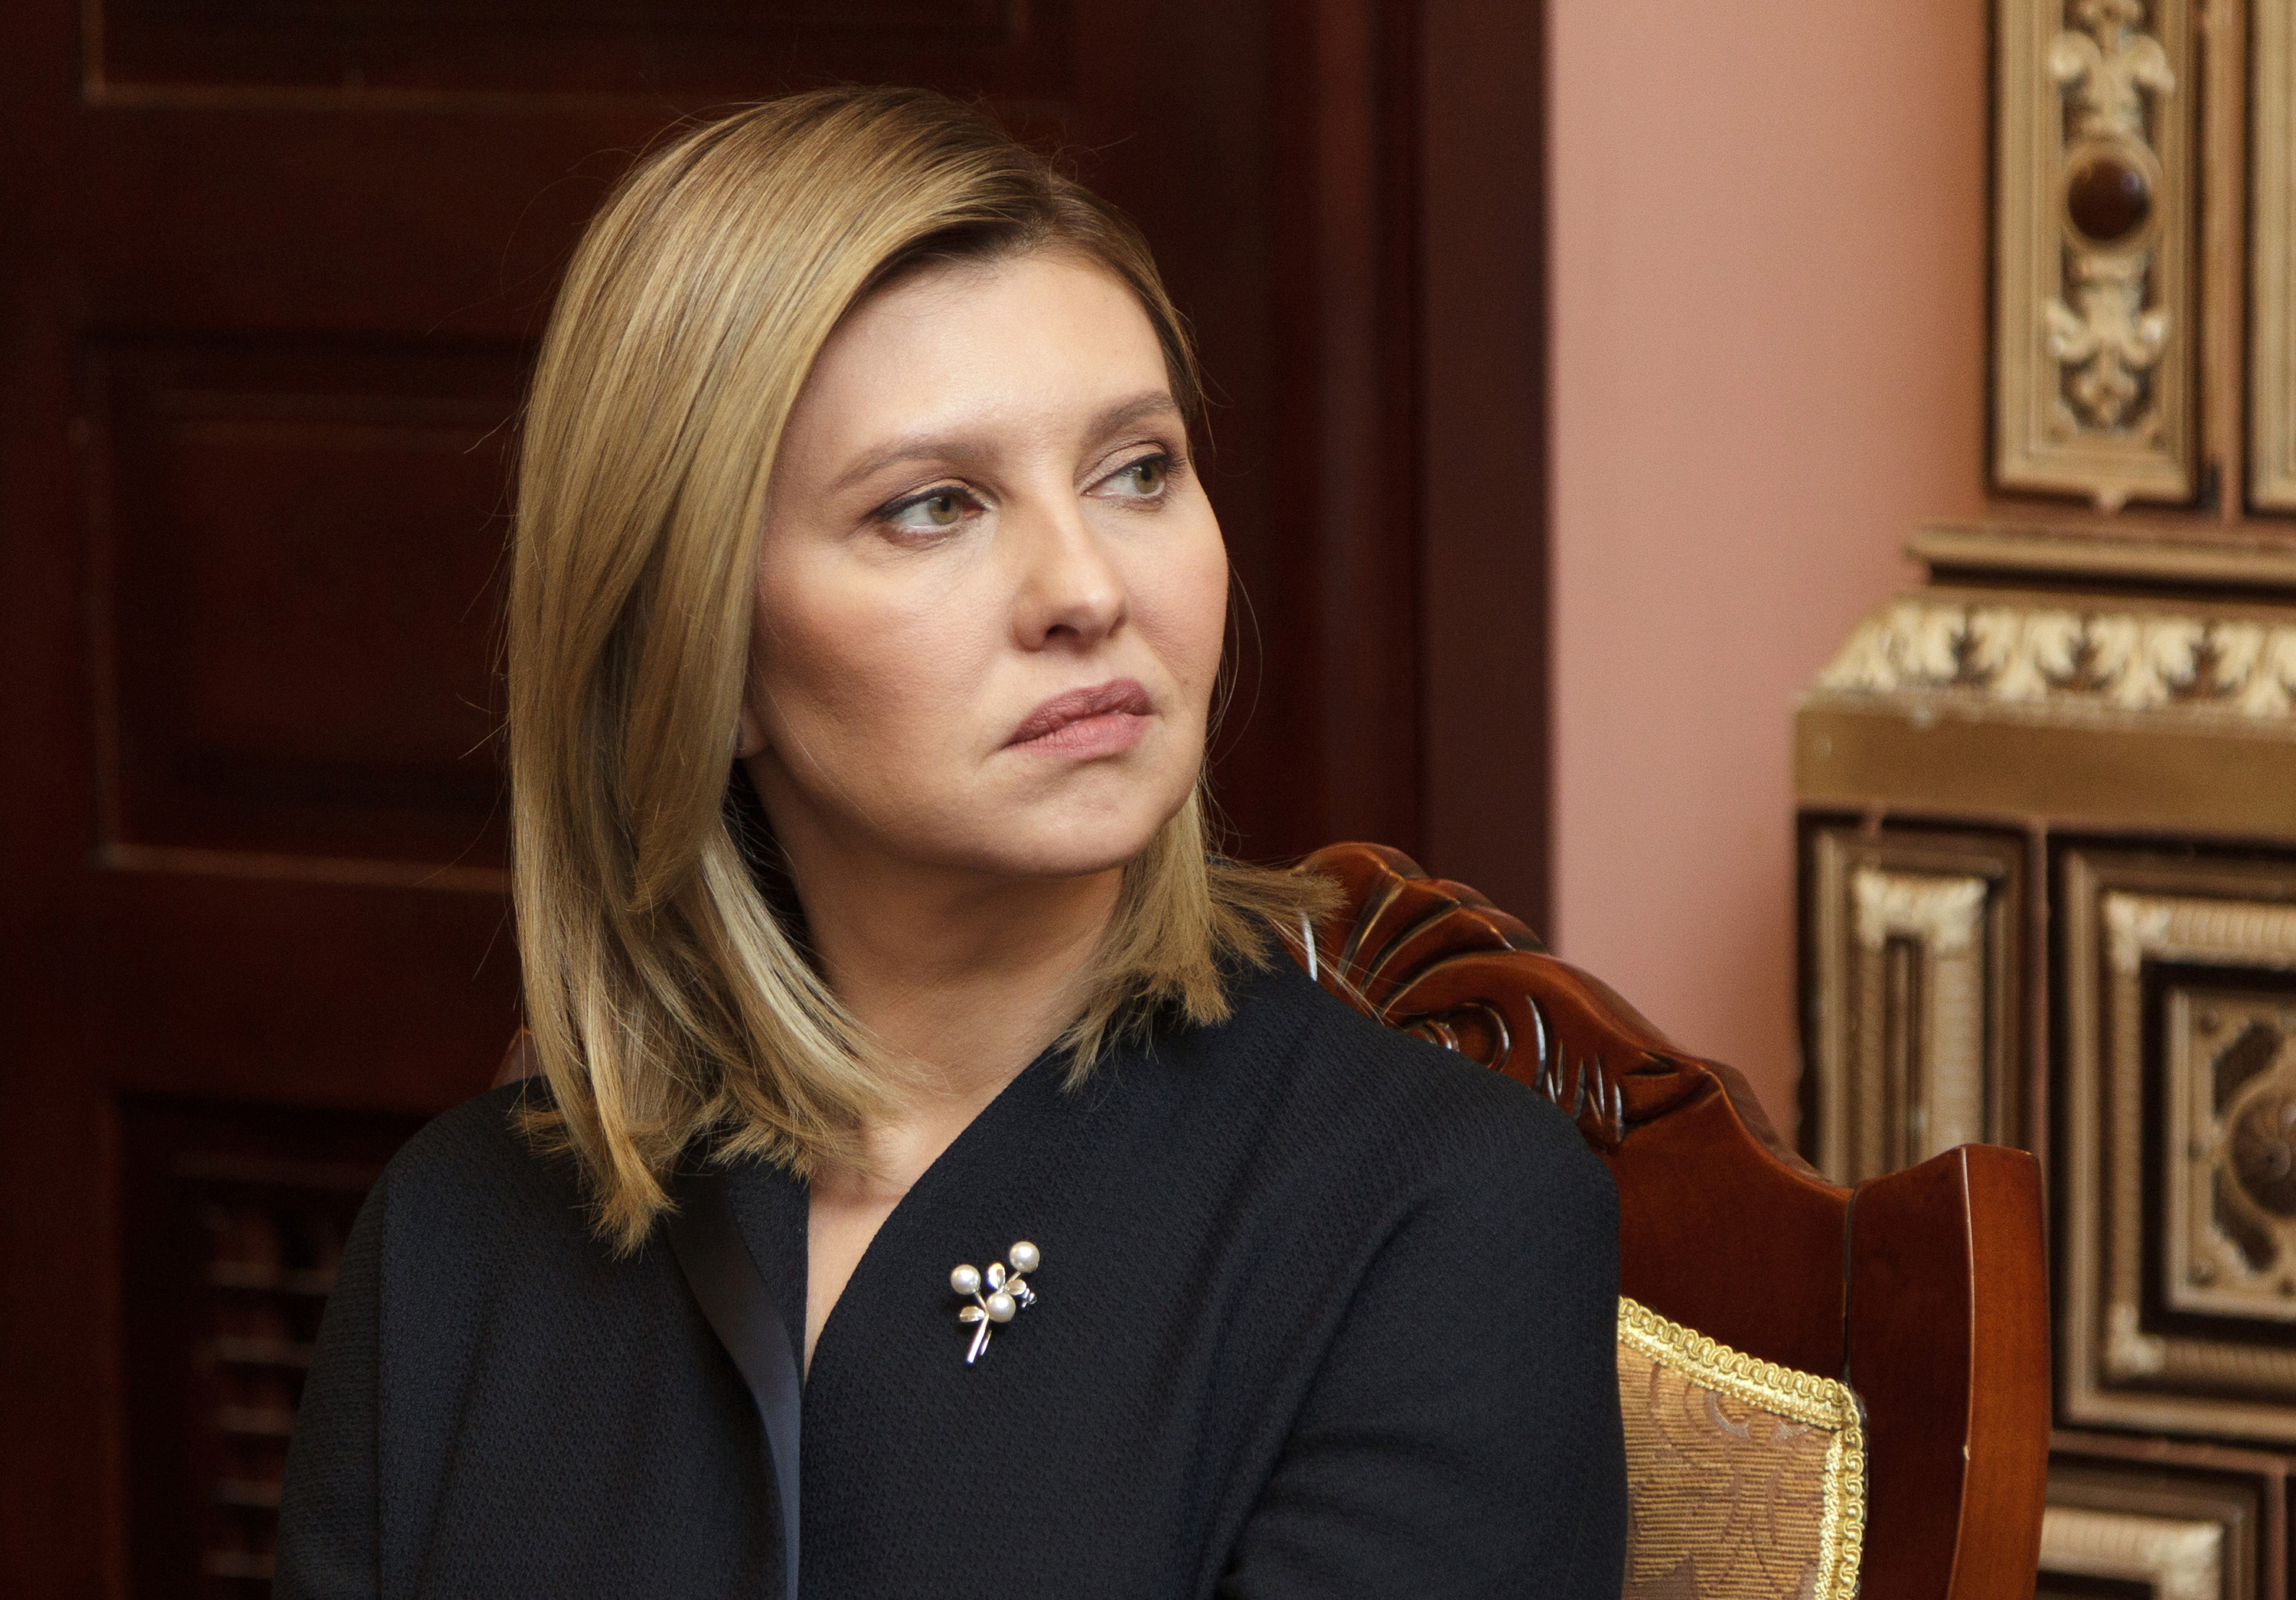 Ukrainian First Lady Olena Zelenska attends a book presentation event in Kyiv, Ukraine, on February 21.